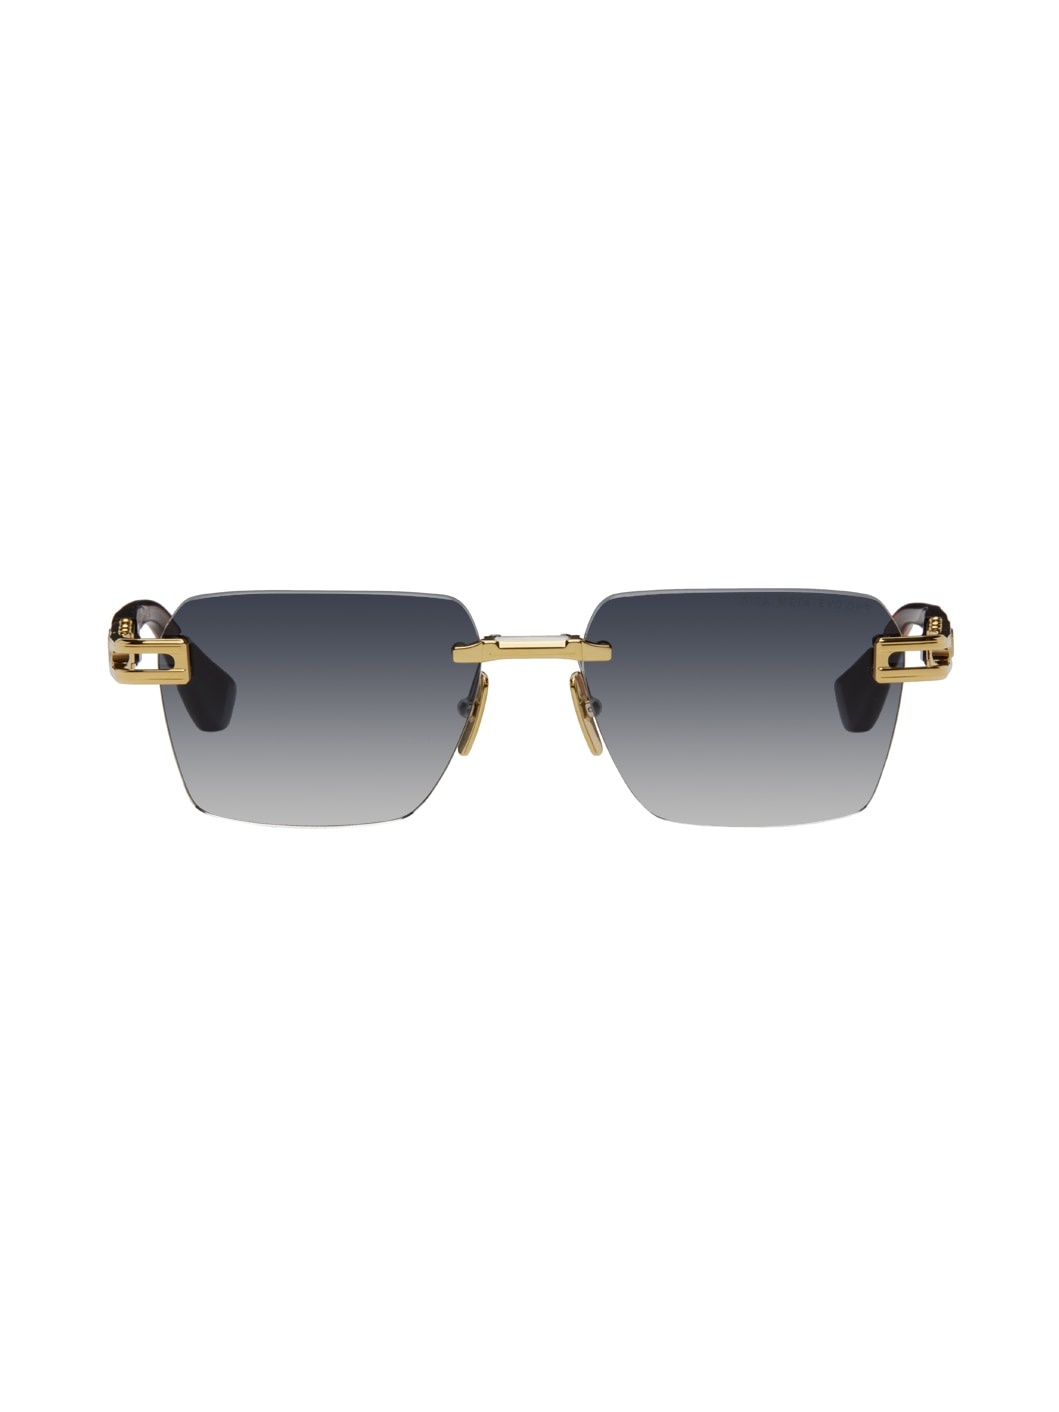 Gold Meta-Evo One Sunglasses - 1